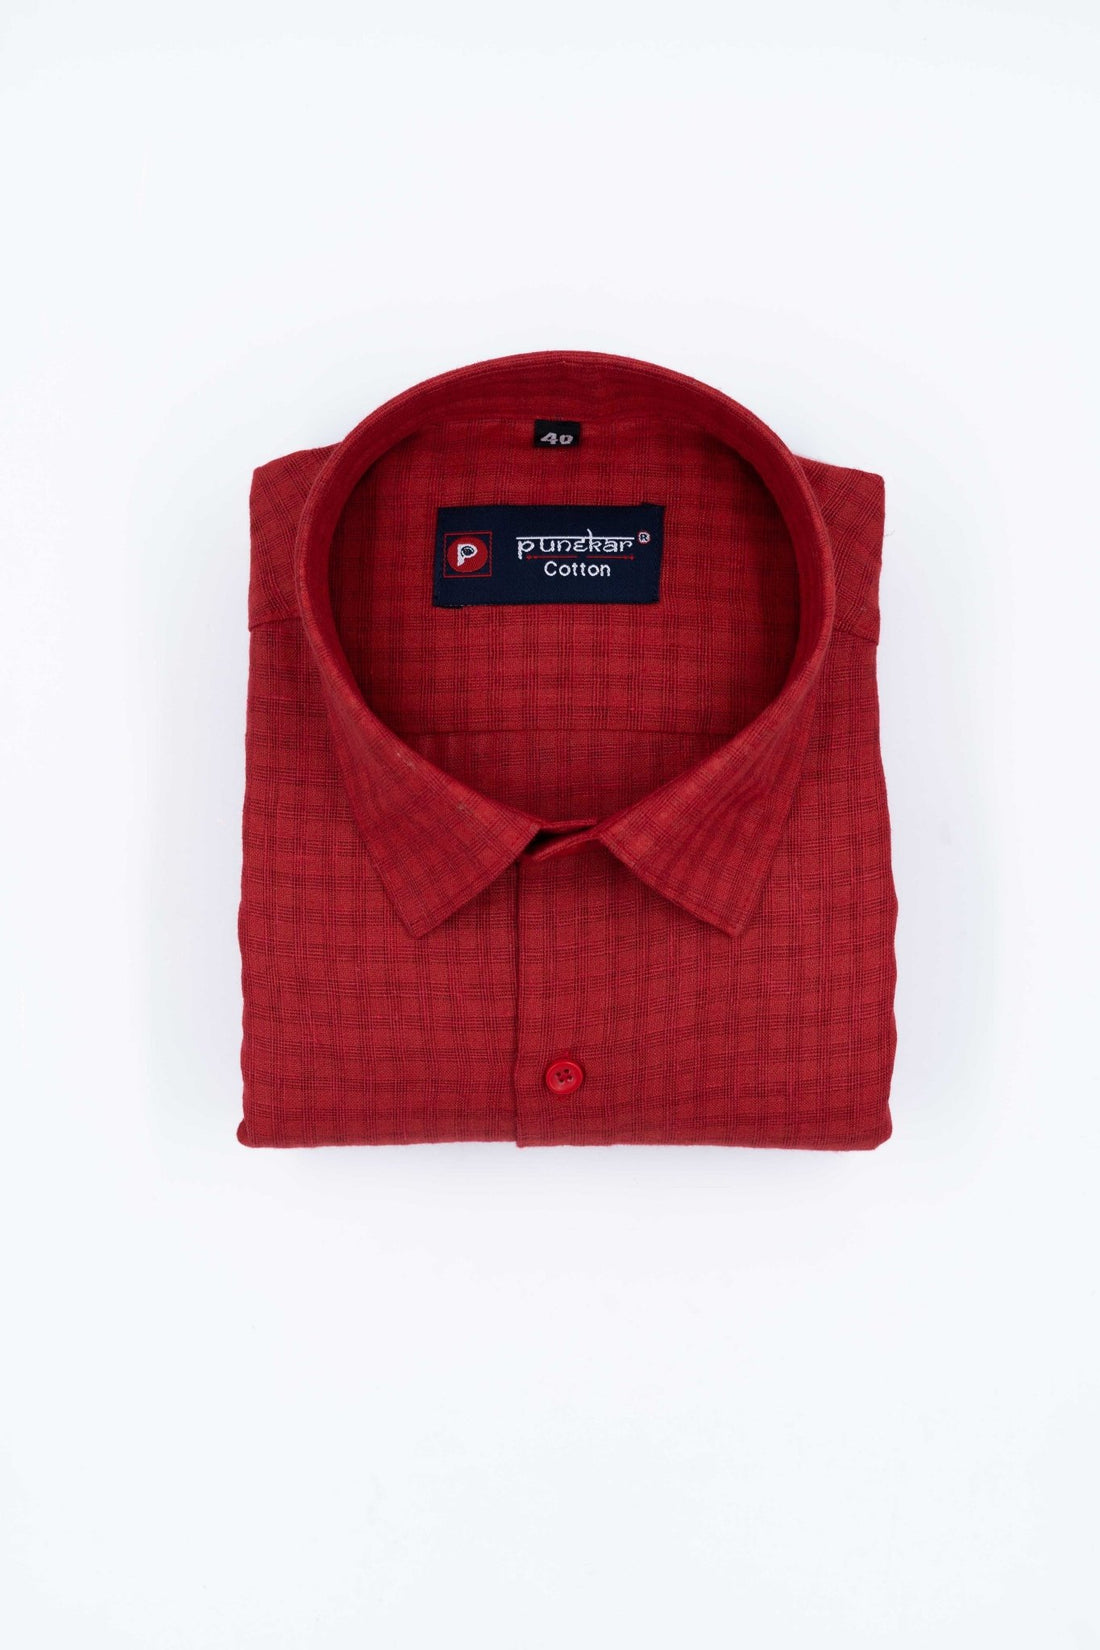 Red Color Cotton Self Woven Checks Handmade Shirts For Men&